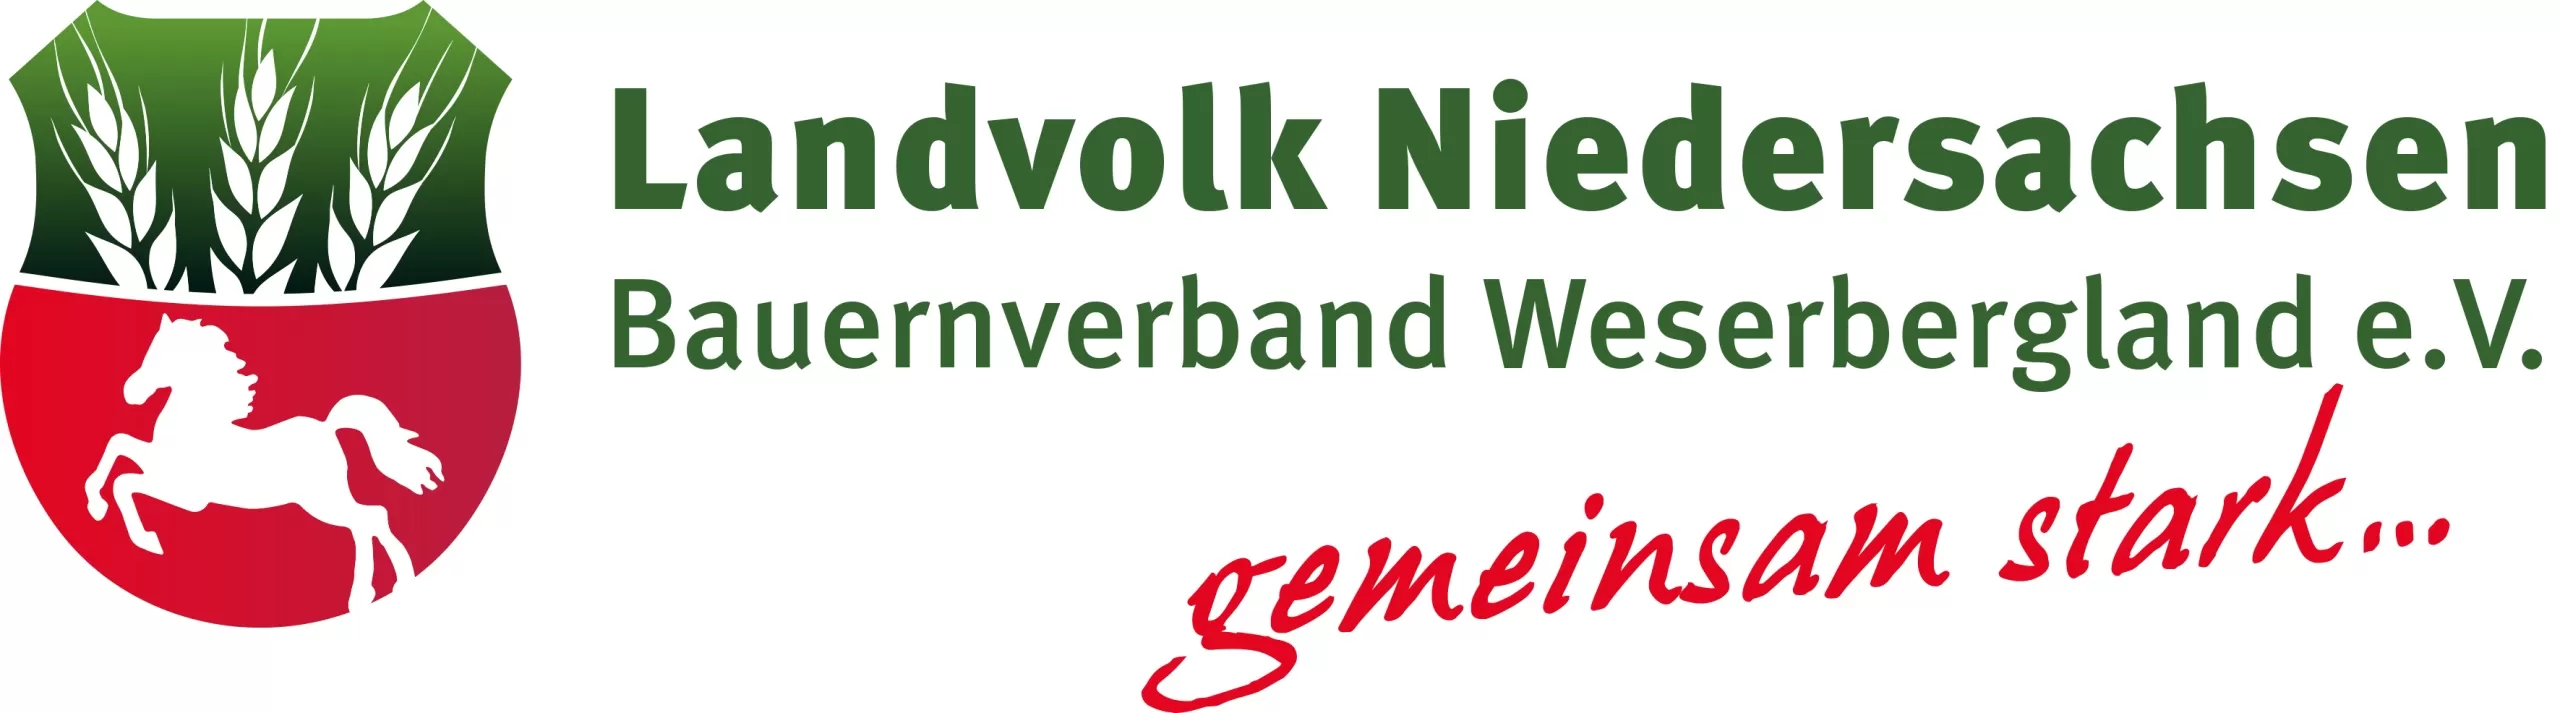 Logo Landvolk Weserbergland mit Claim